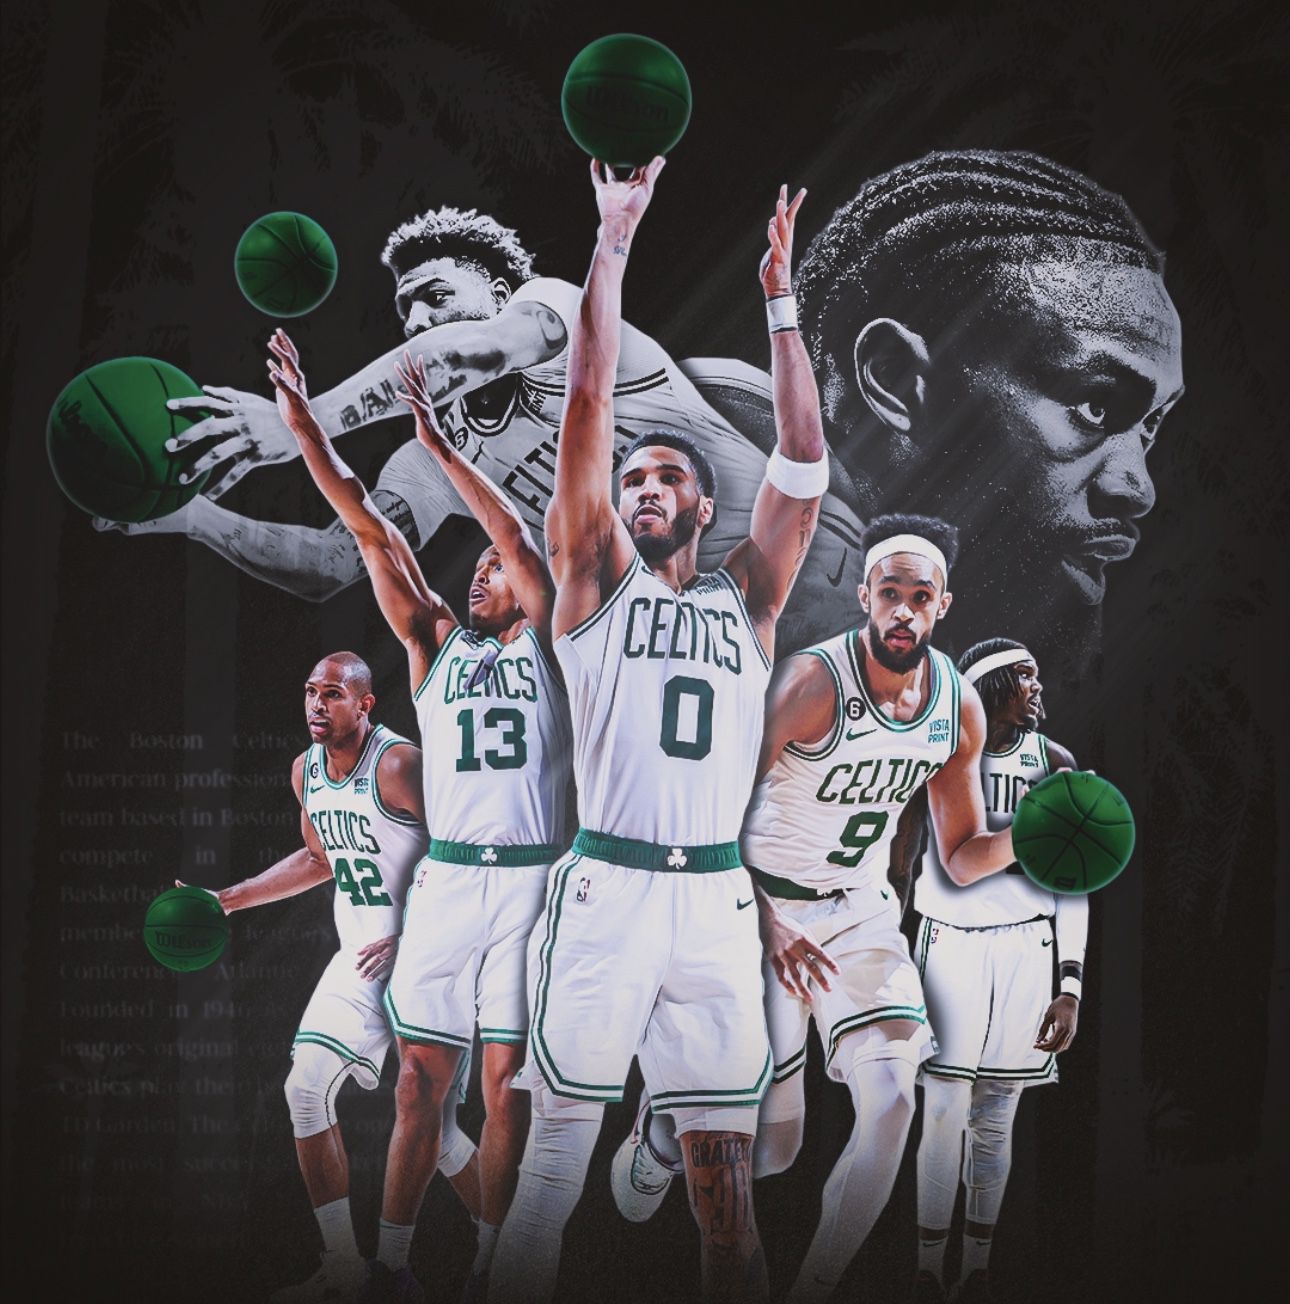 Celtics v. Heat game 7 - Monday 5/29